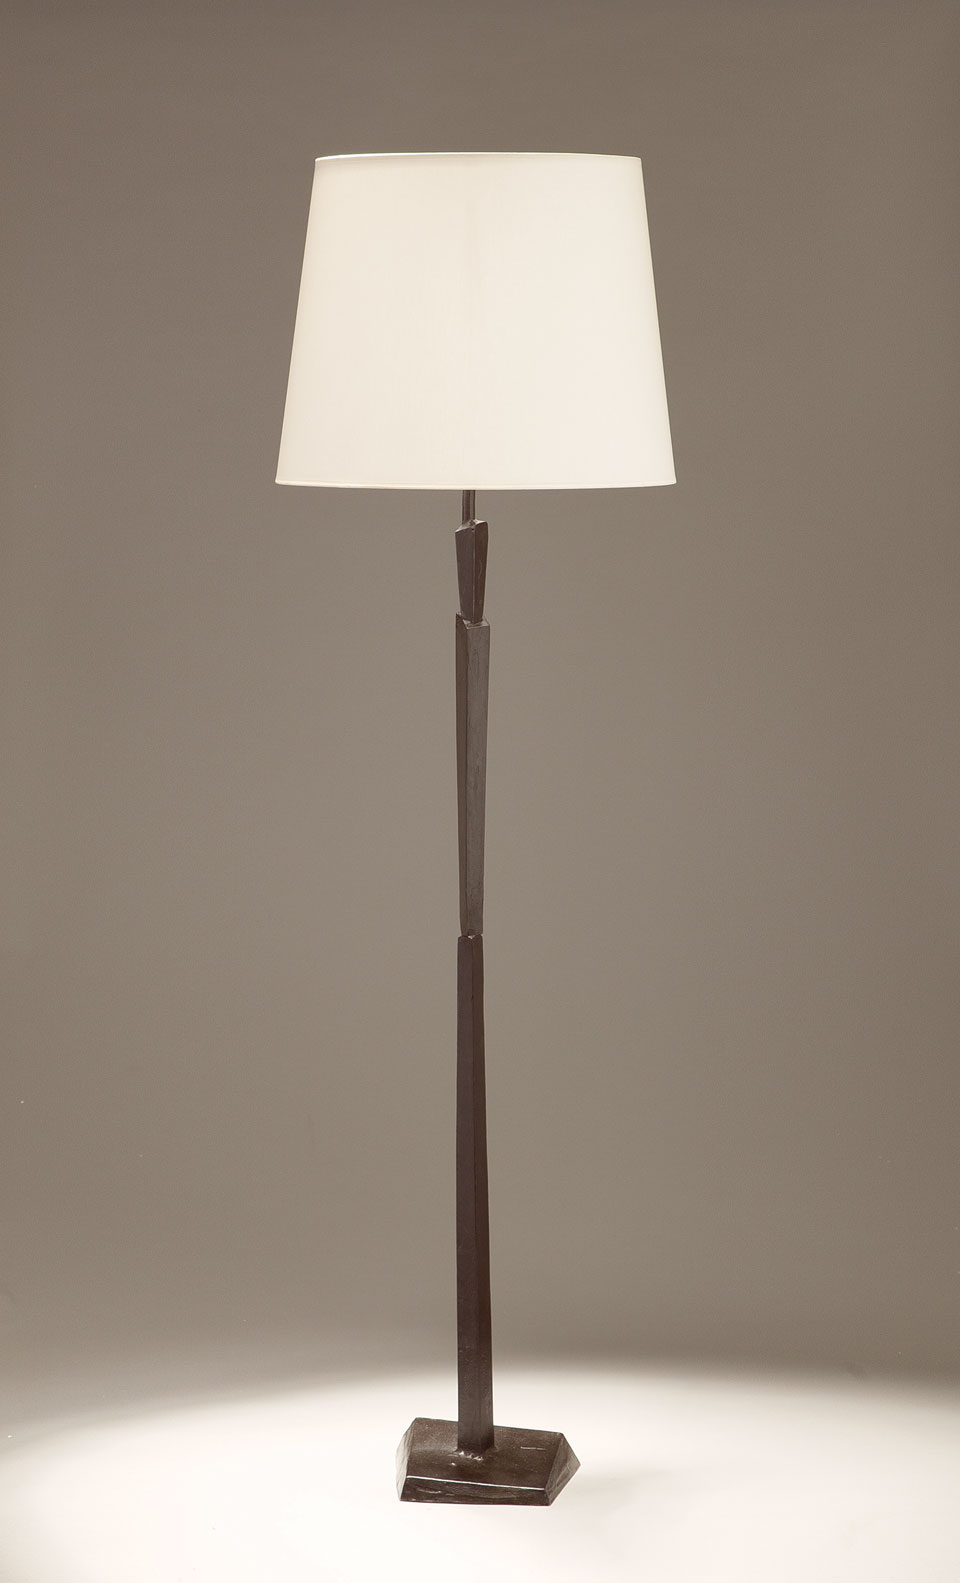 Floor Lamp With Off White Fabric Shade Irregular Base throughout sizing 960 X 1583